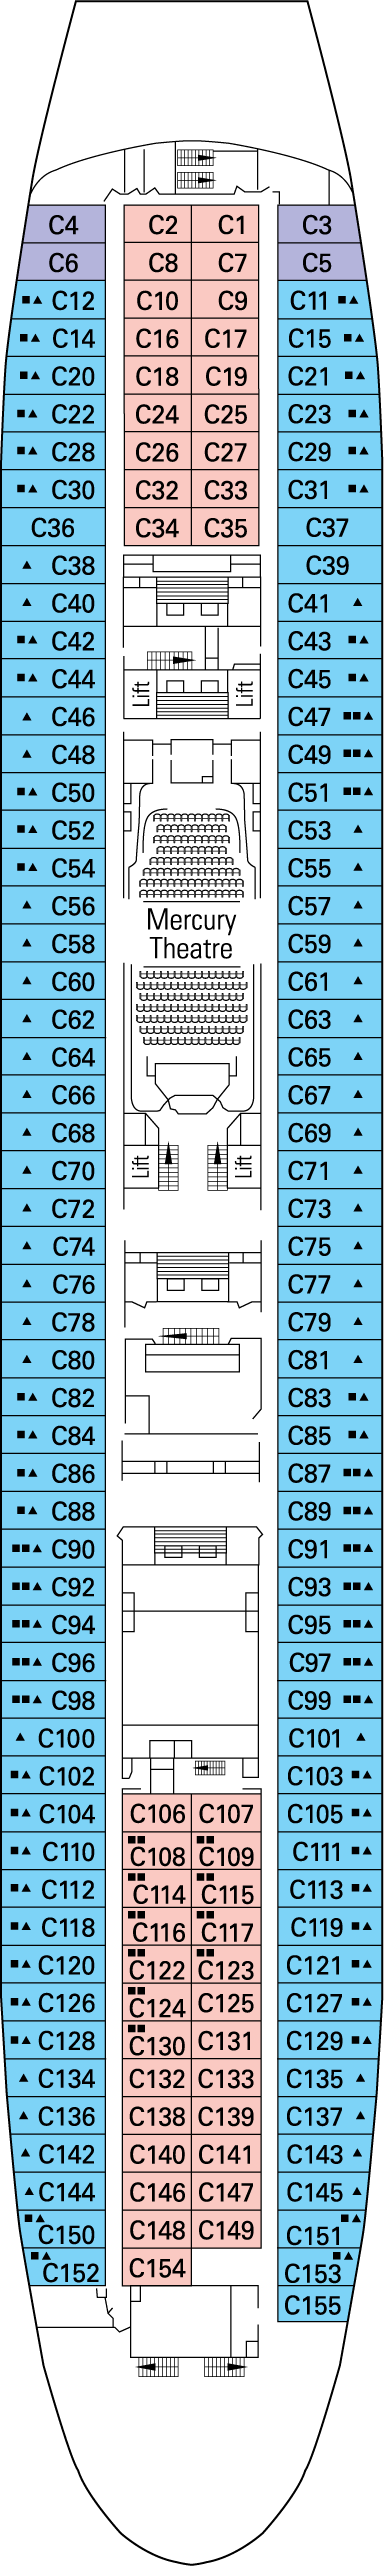 Continental Deck Deck Plan